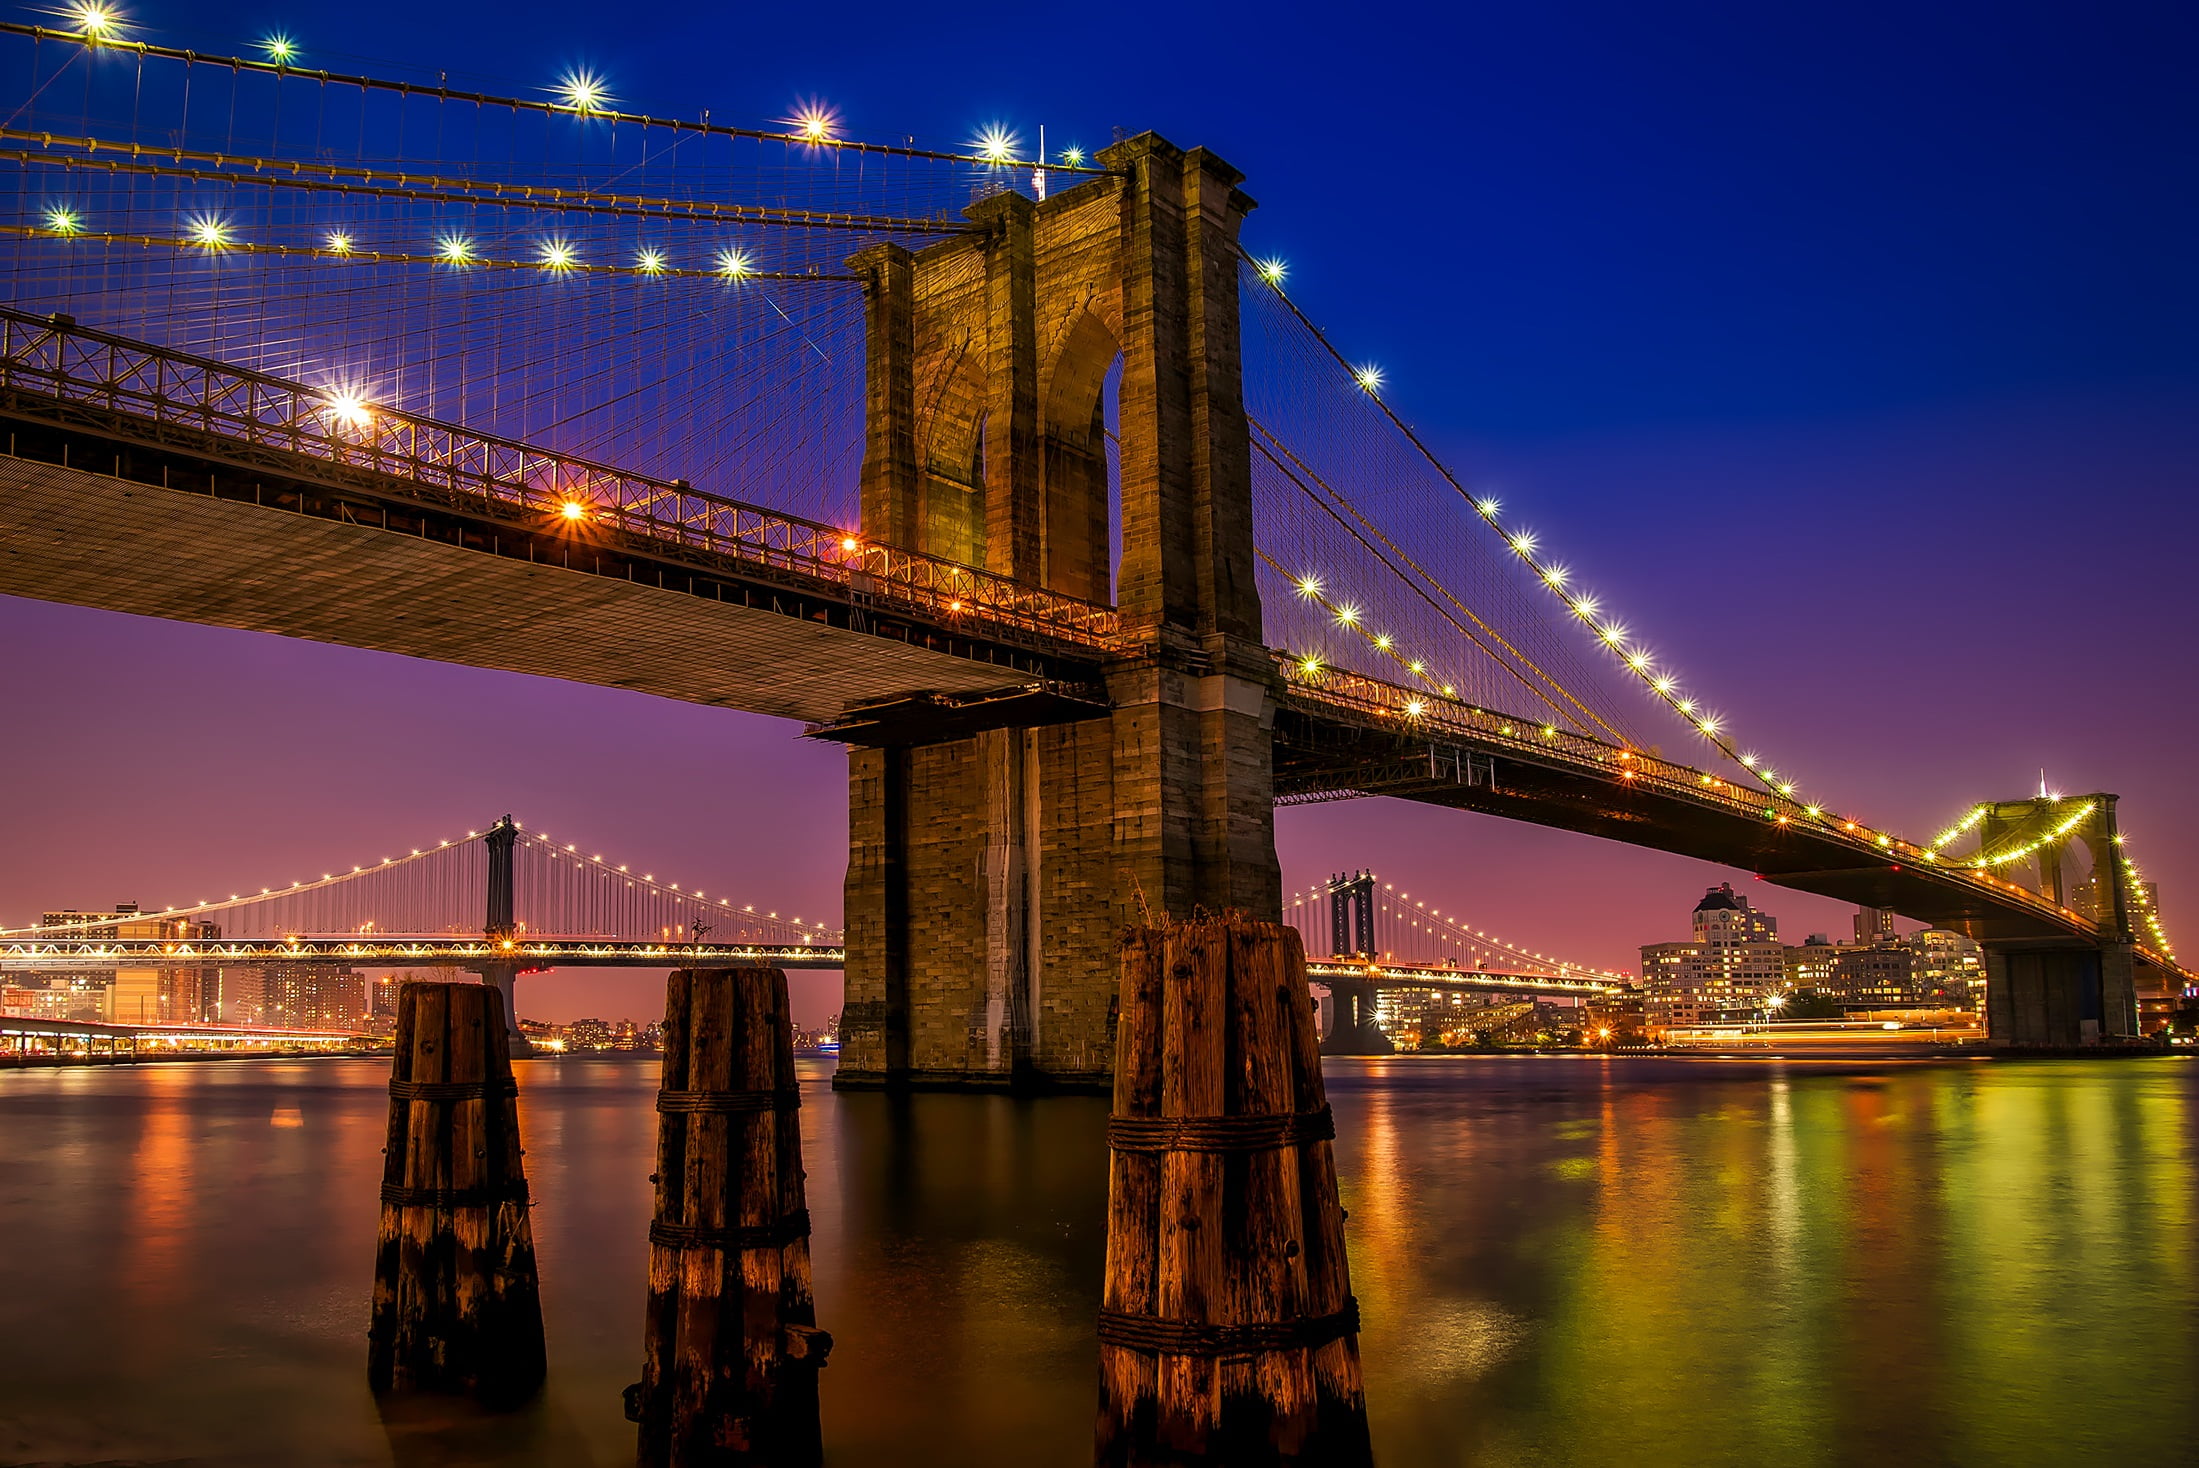 panorama photography of lighted bridge